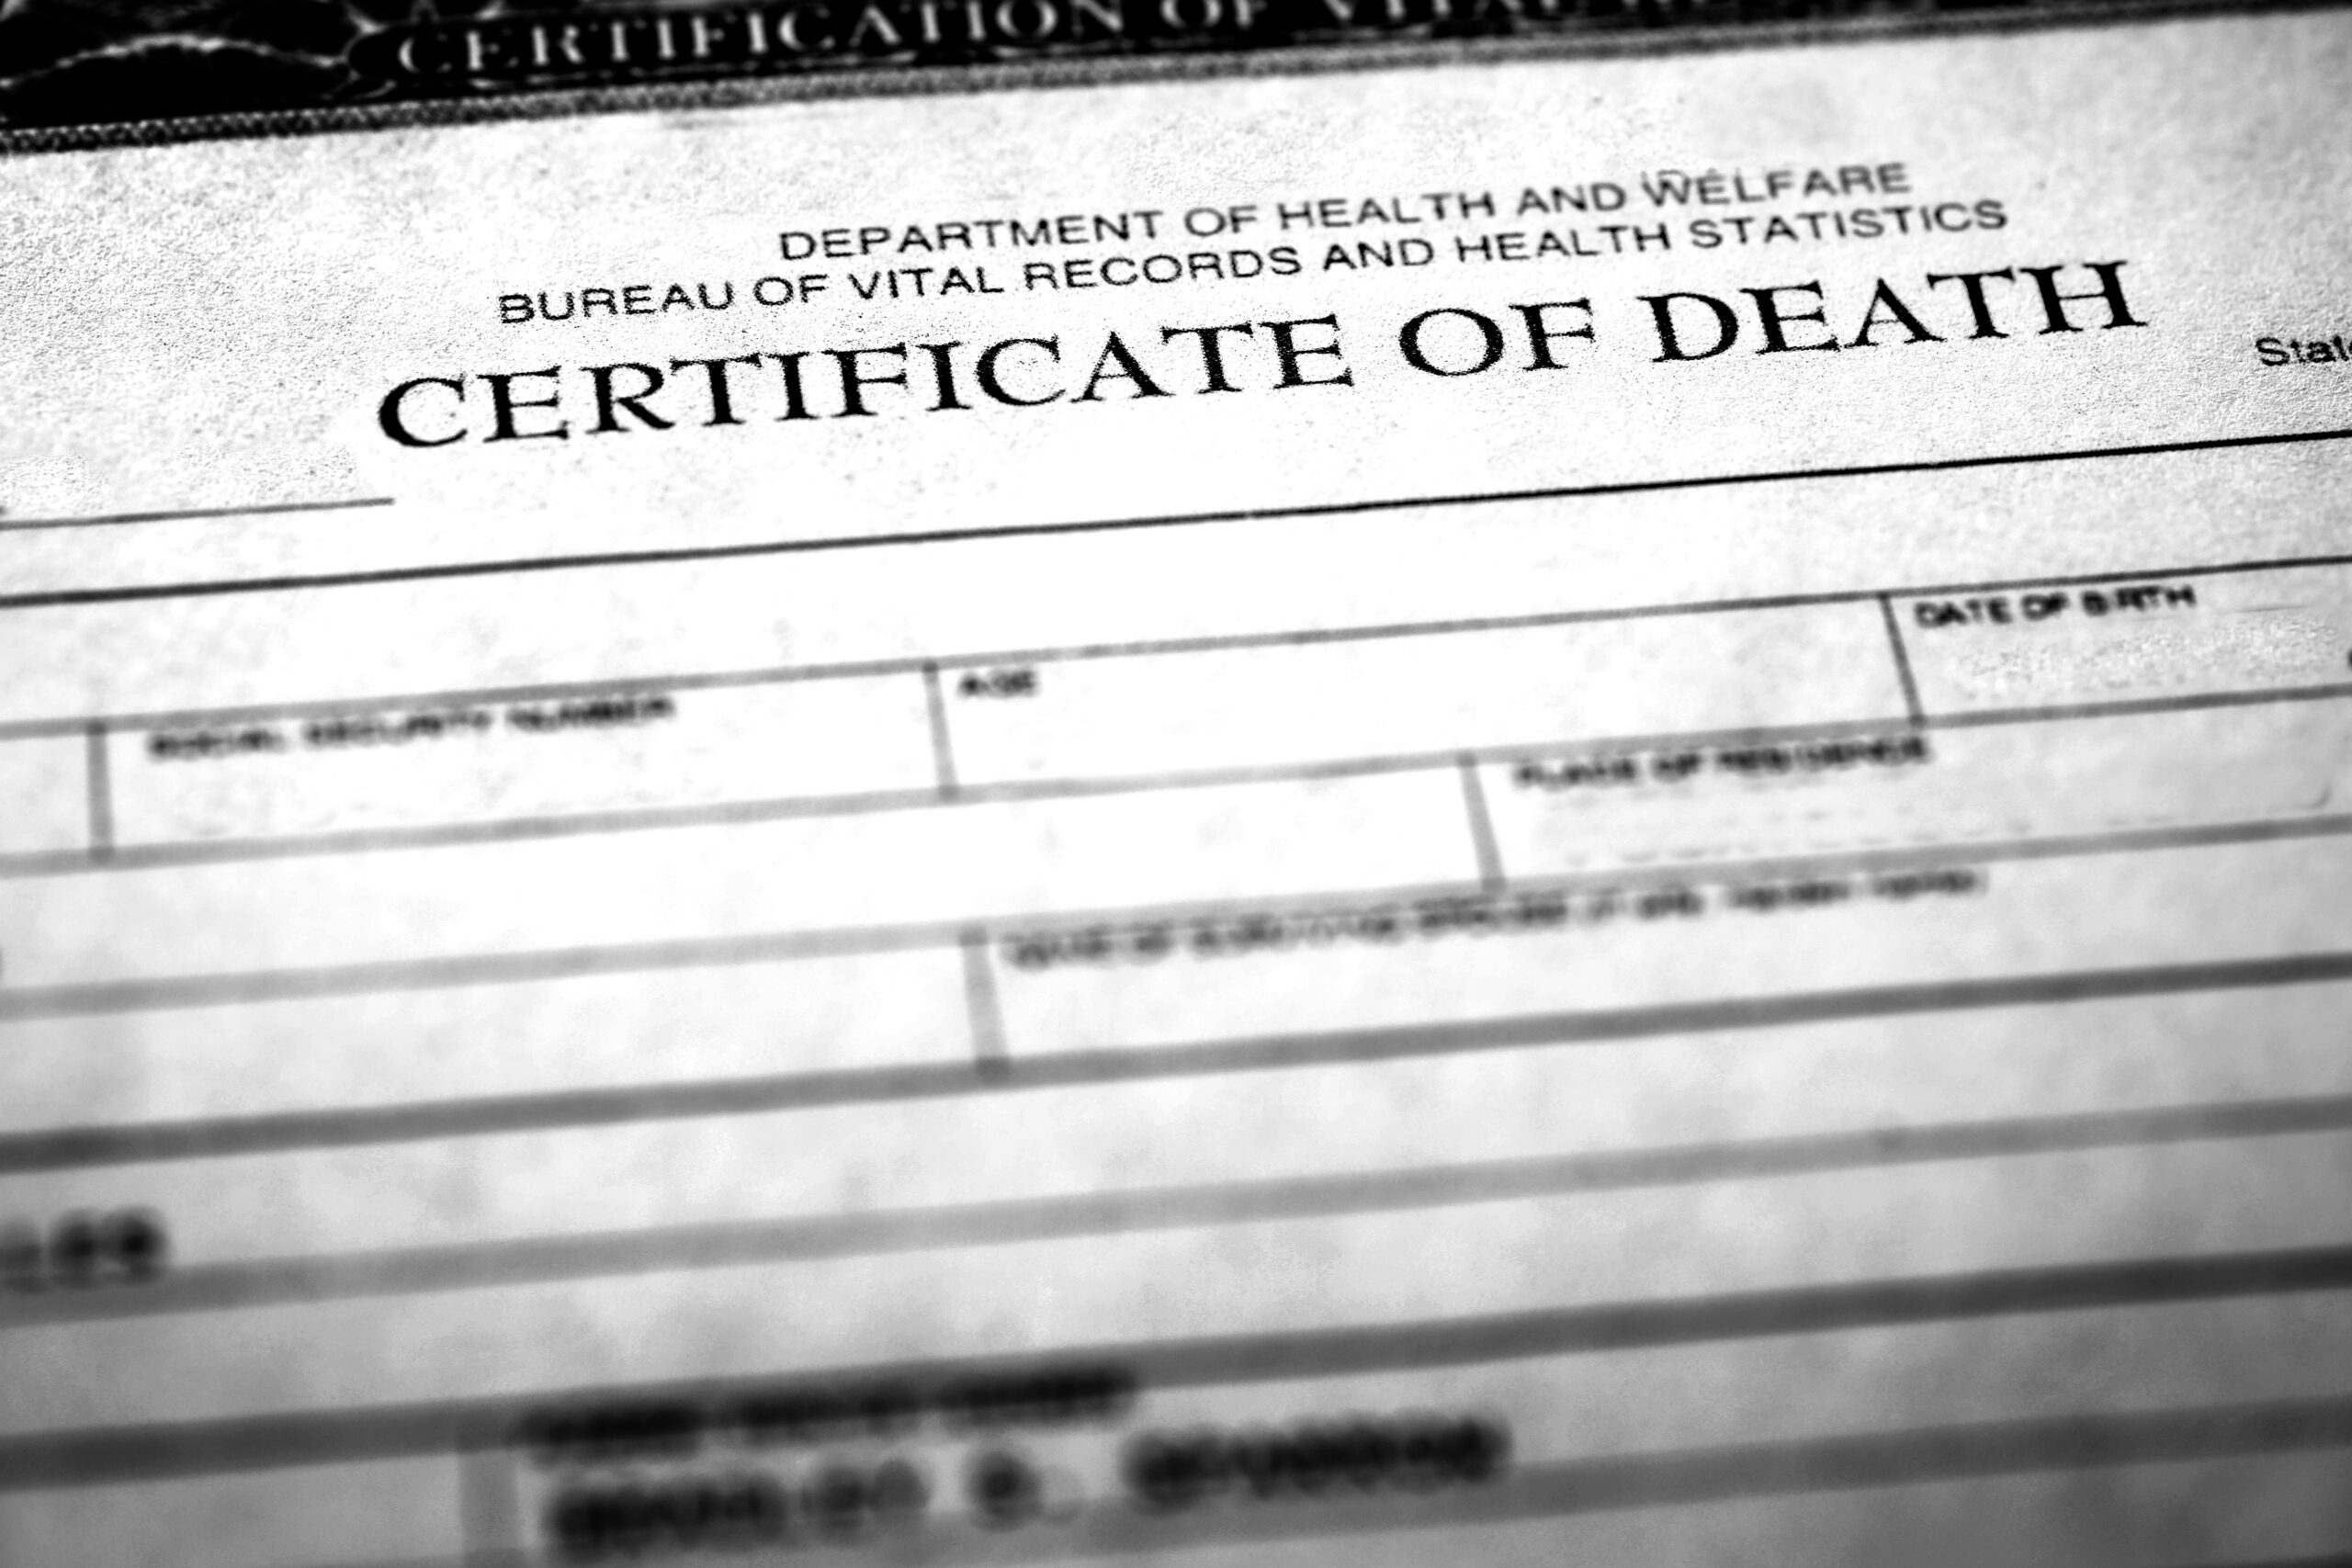 Certified copy of certificate of death